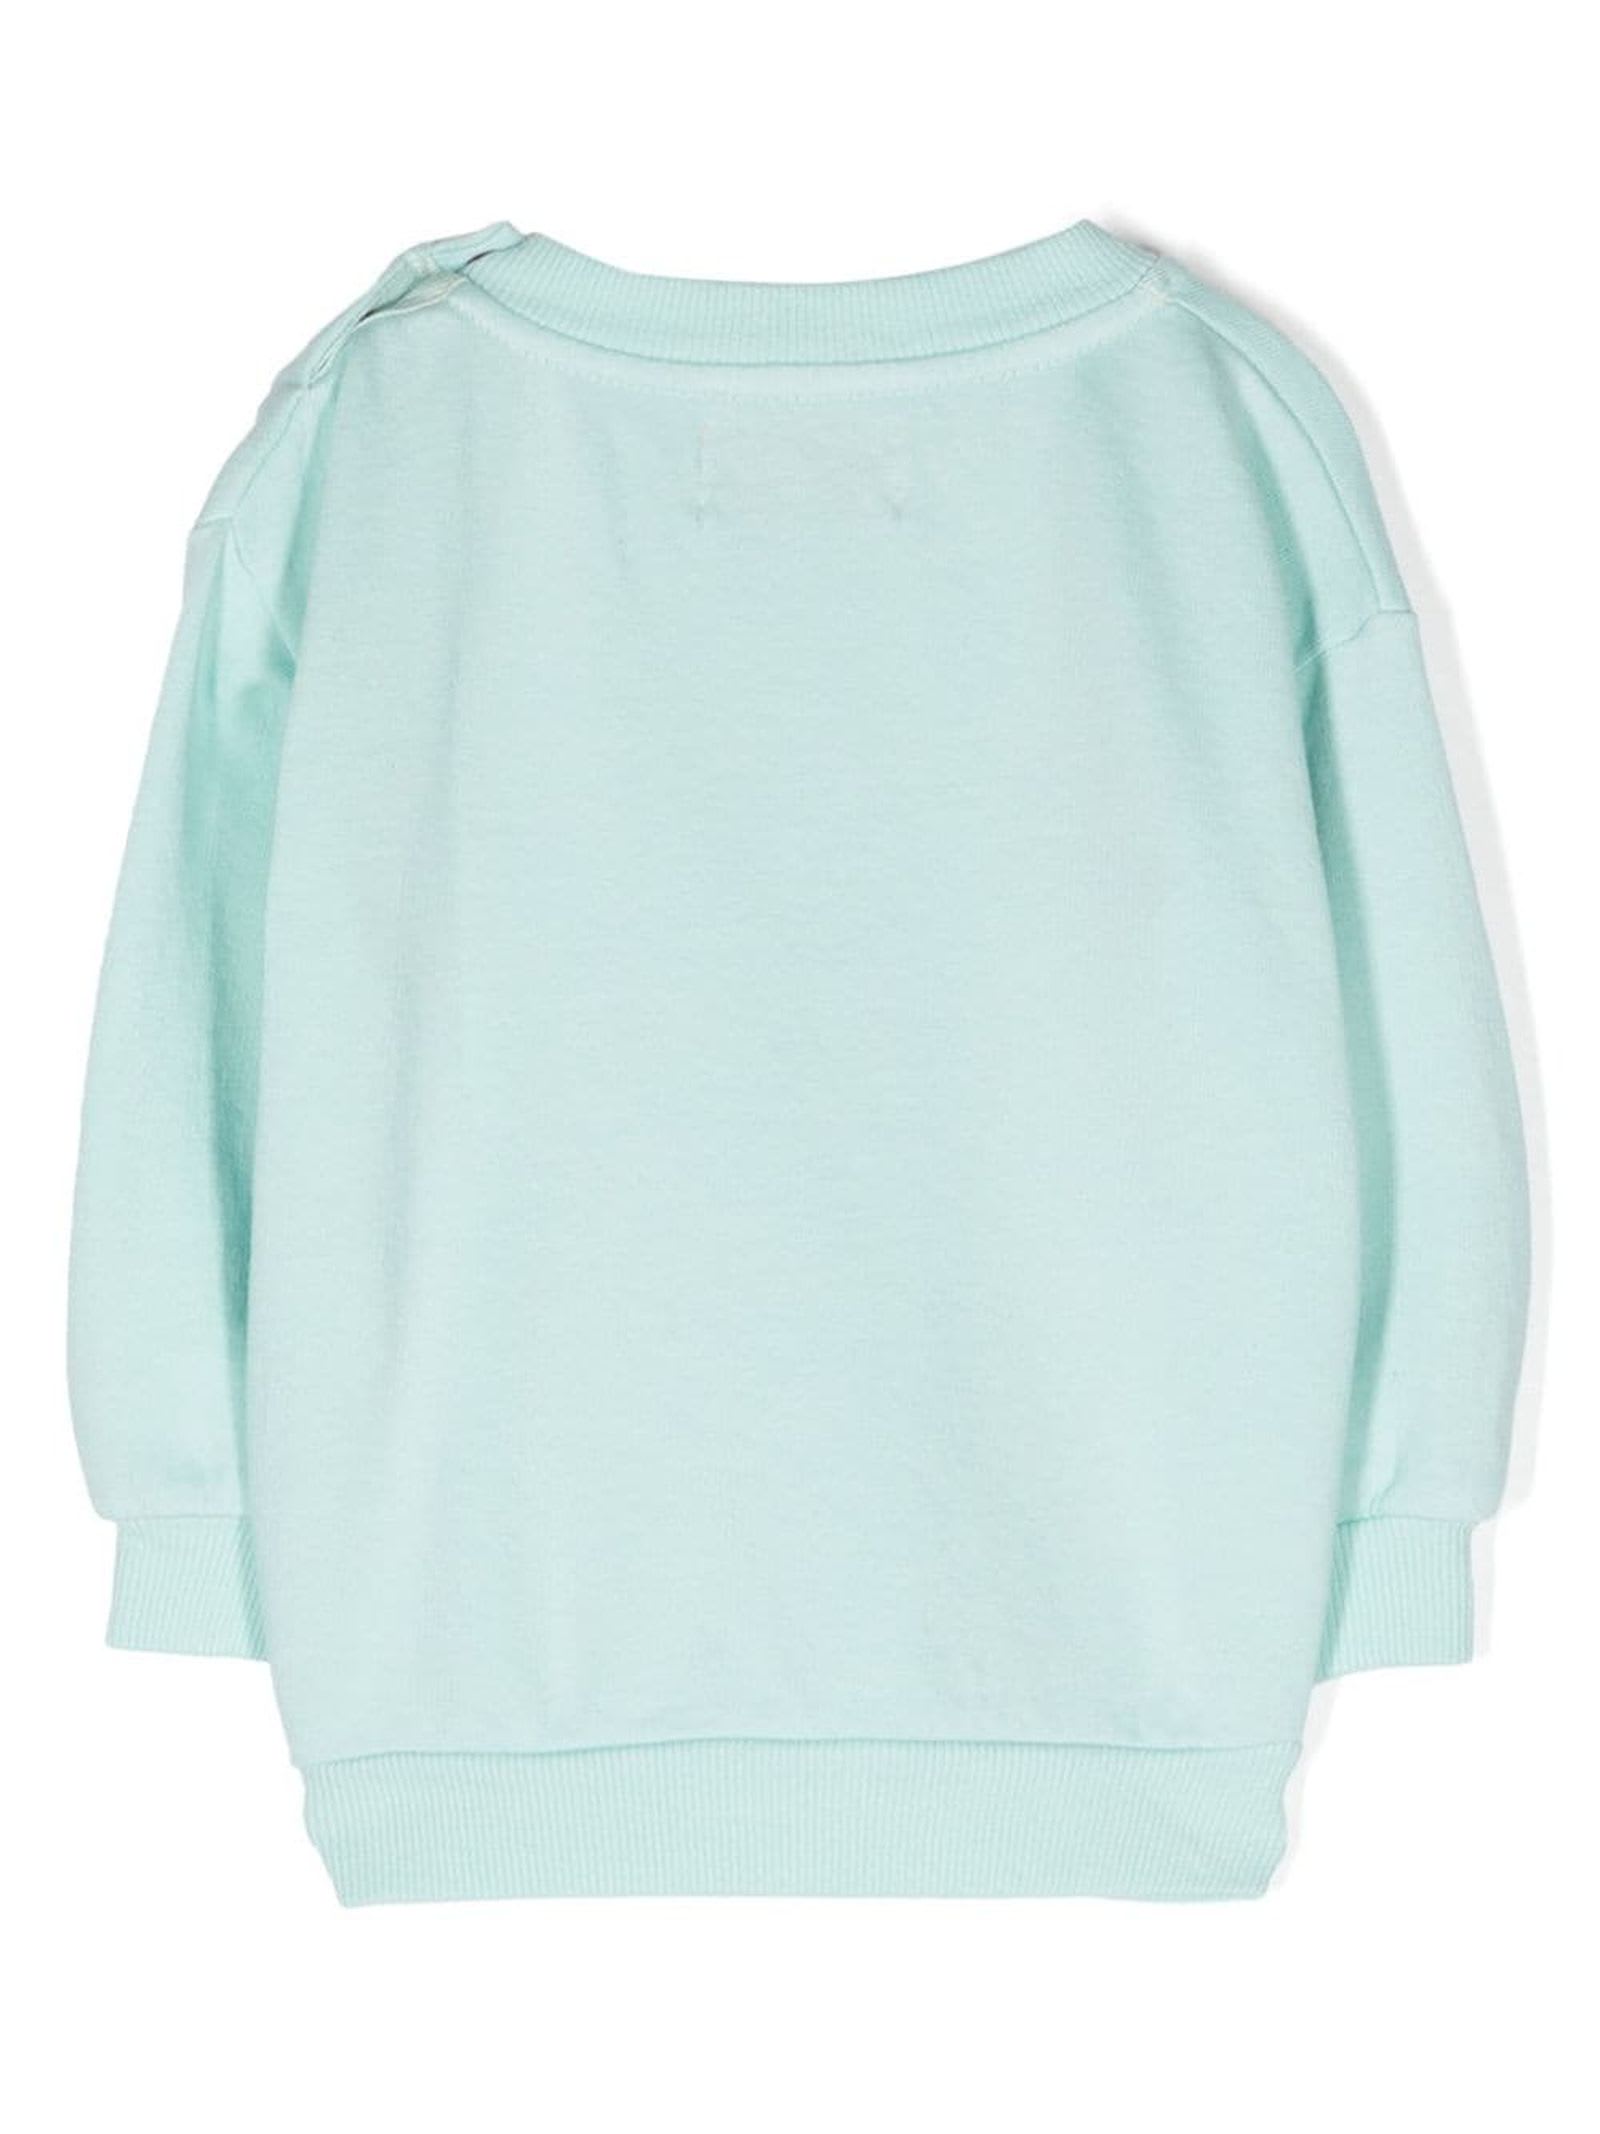 Shop Bobo Choses Sweaters Clear Blue